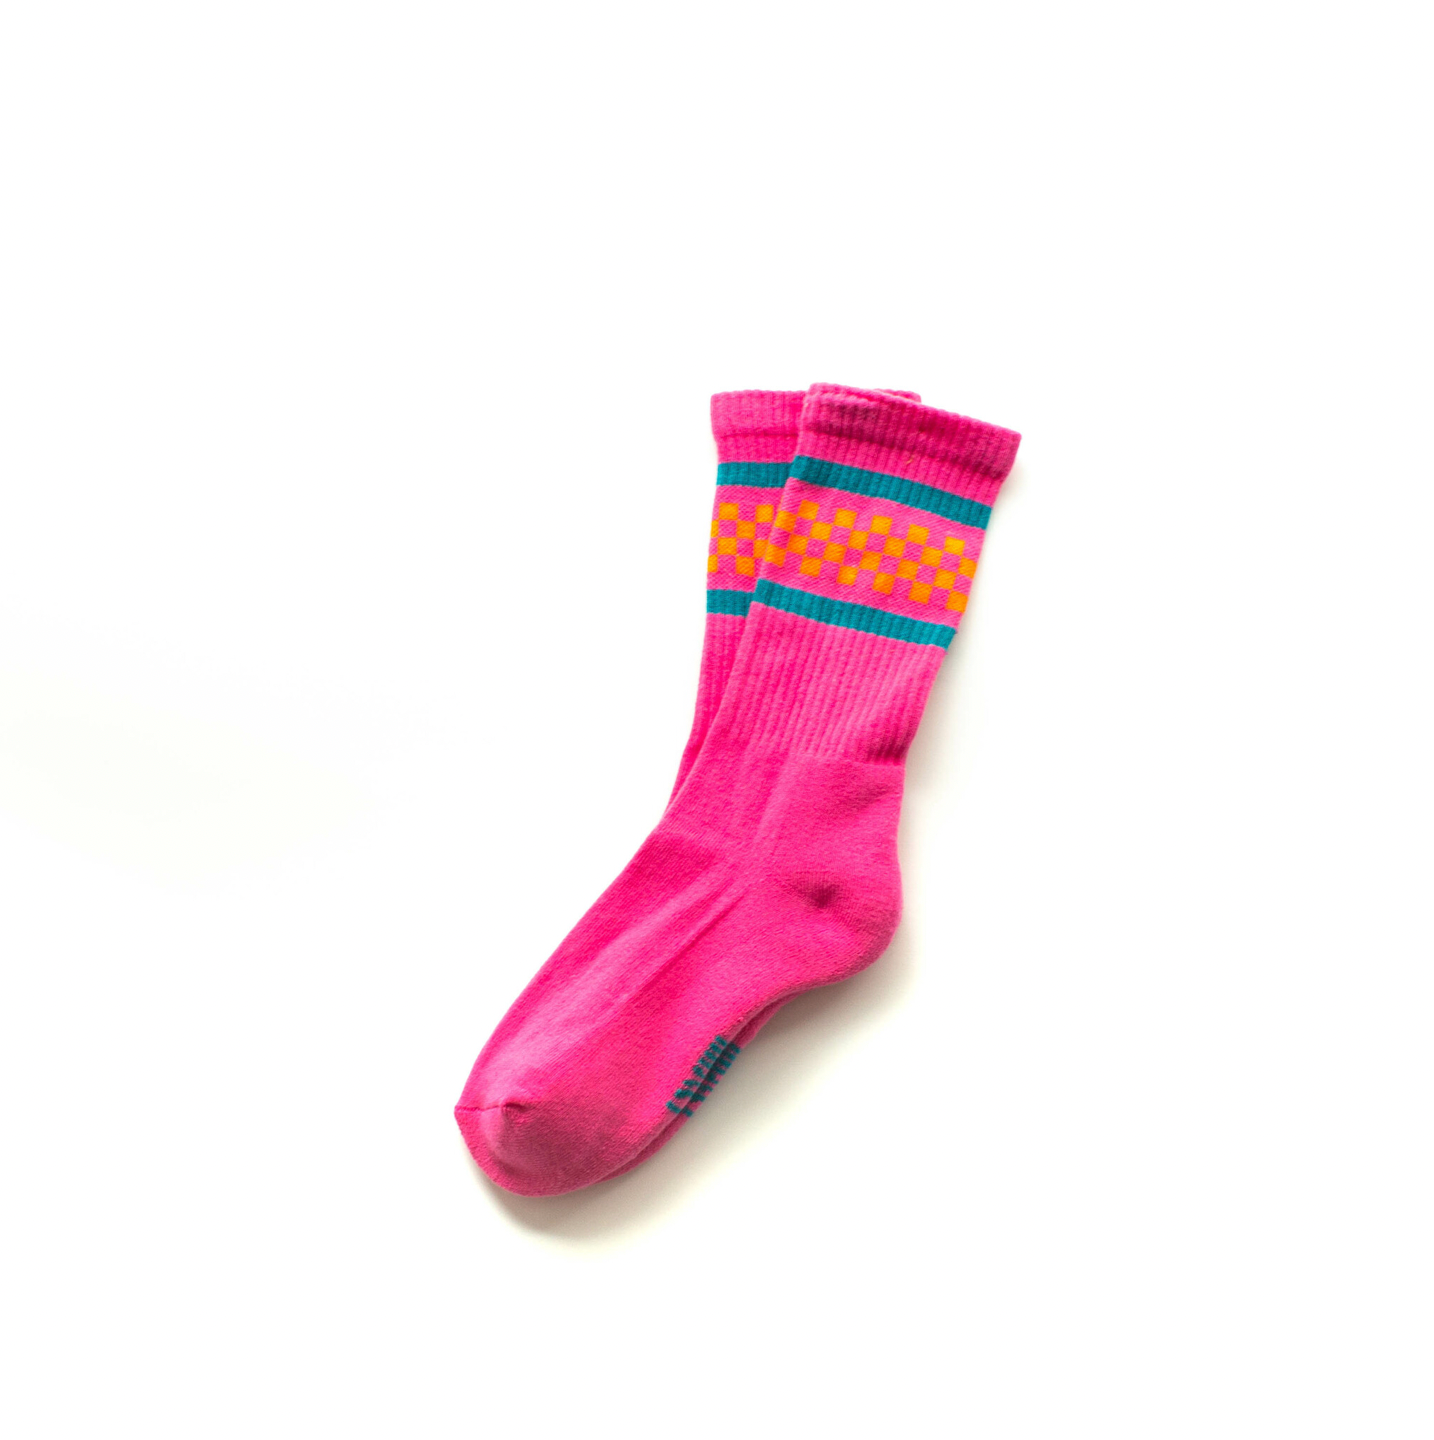 Pink & Orange Check Socks - LAST ONE 0-6 months